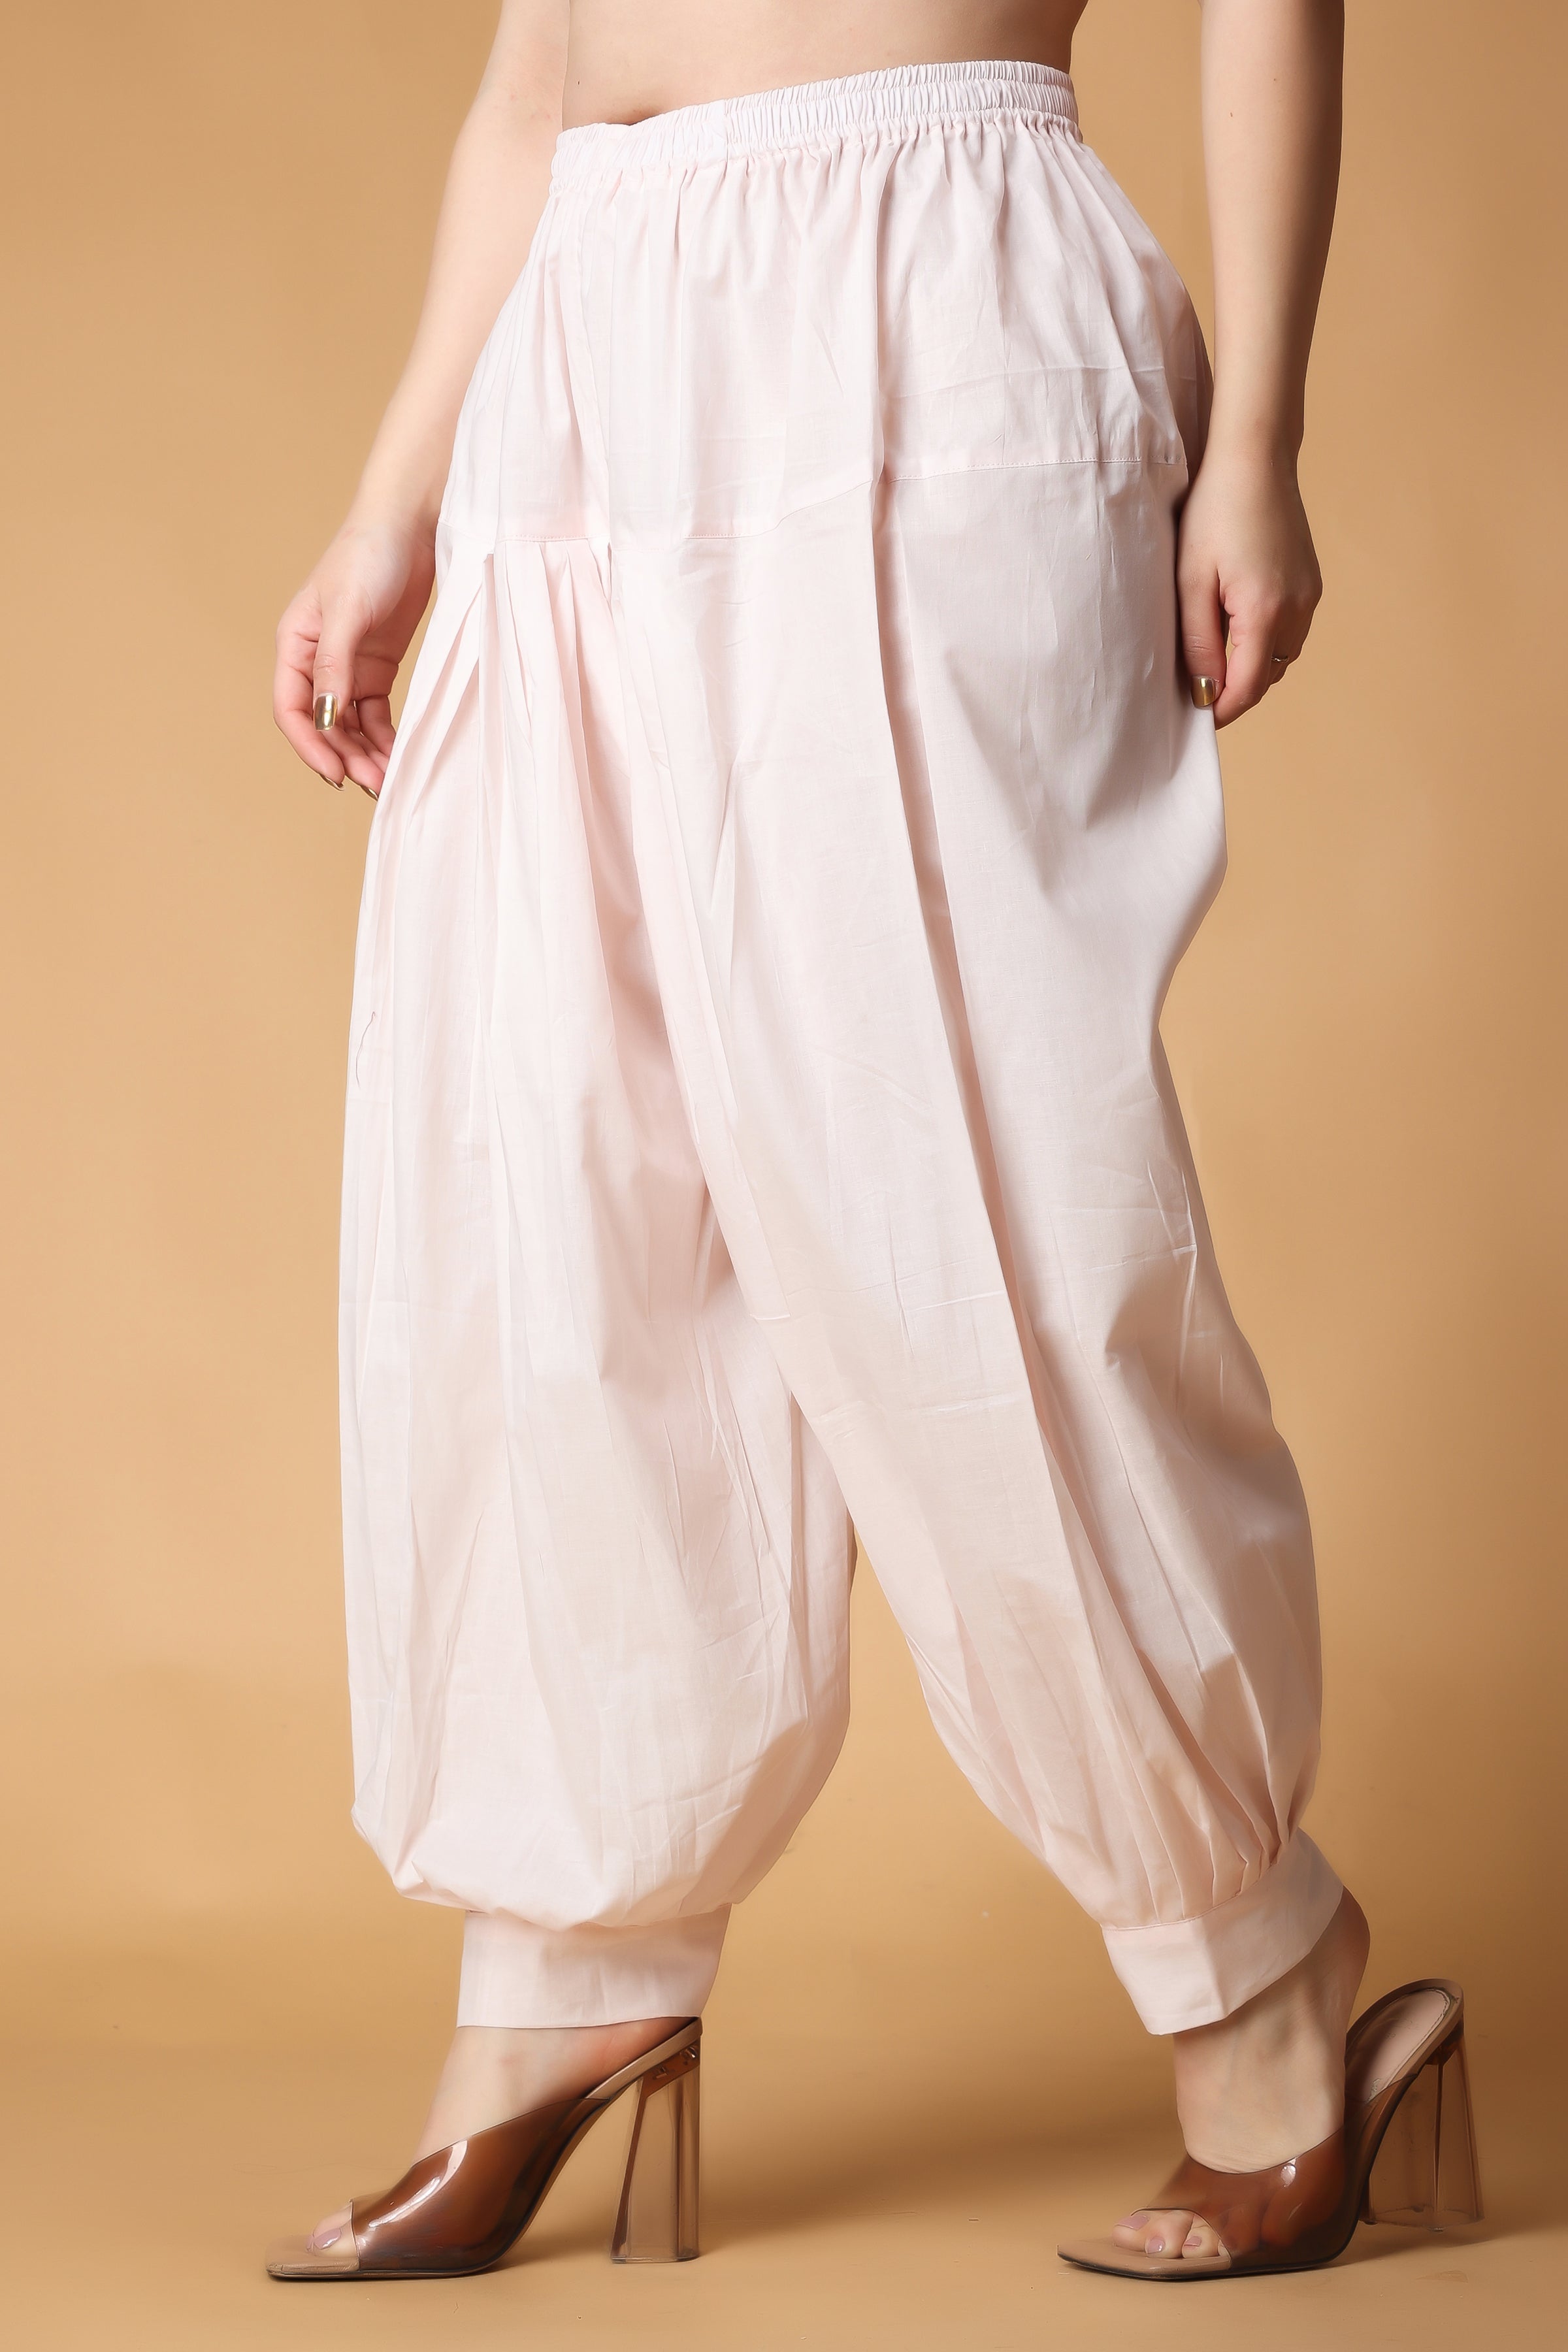 Men's Women's Rayon Harem Afghani Printed Pants/Trousers/Pyjama